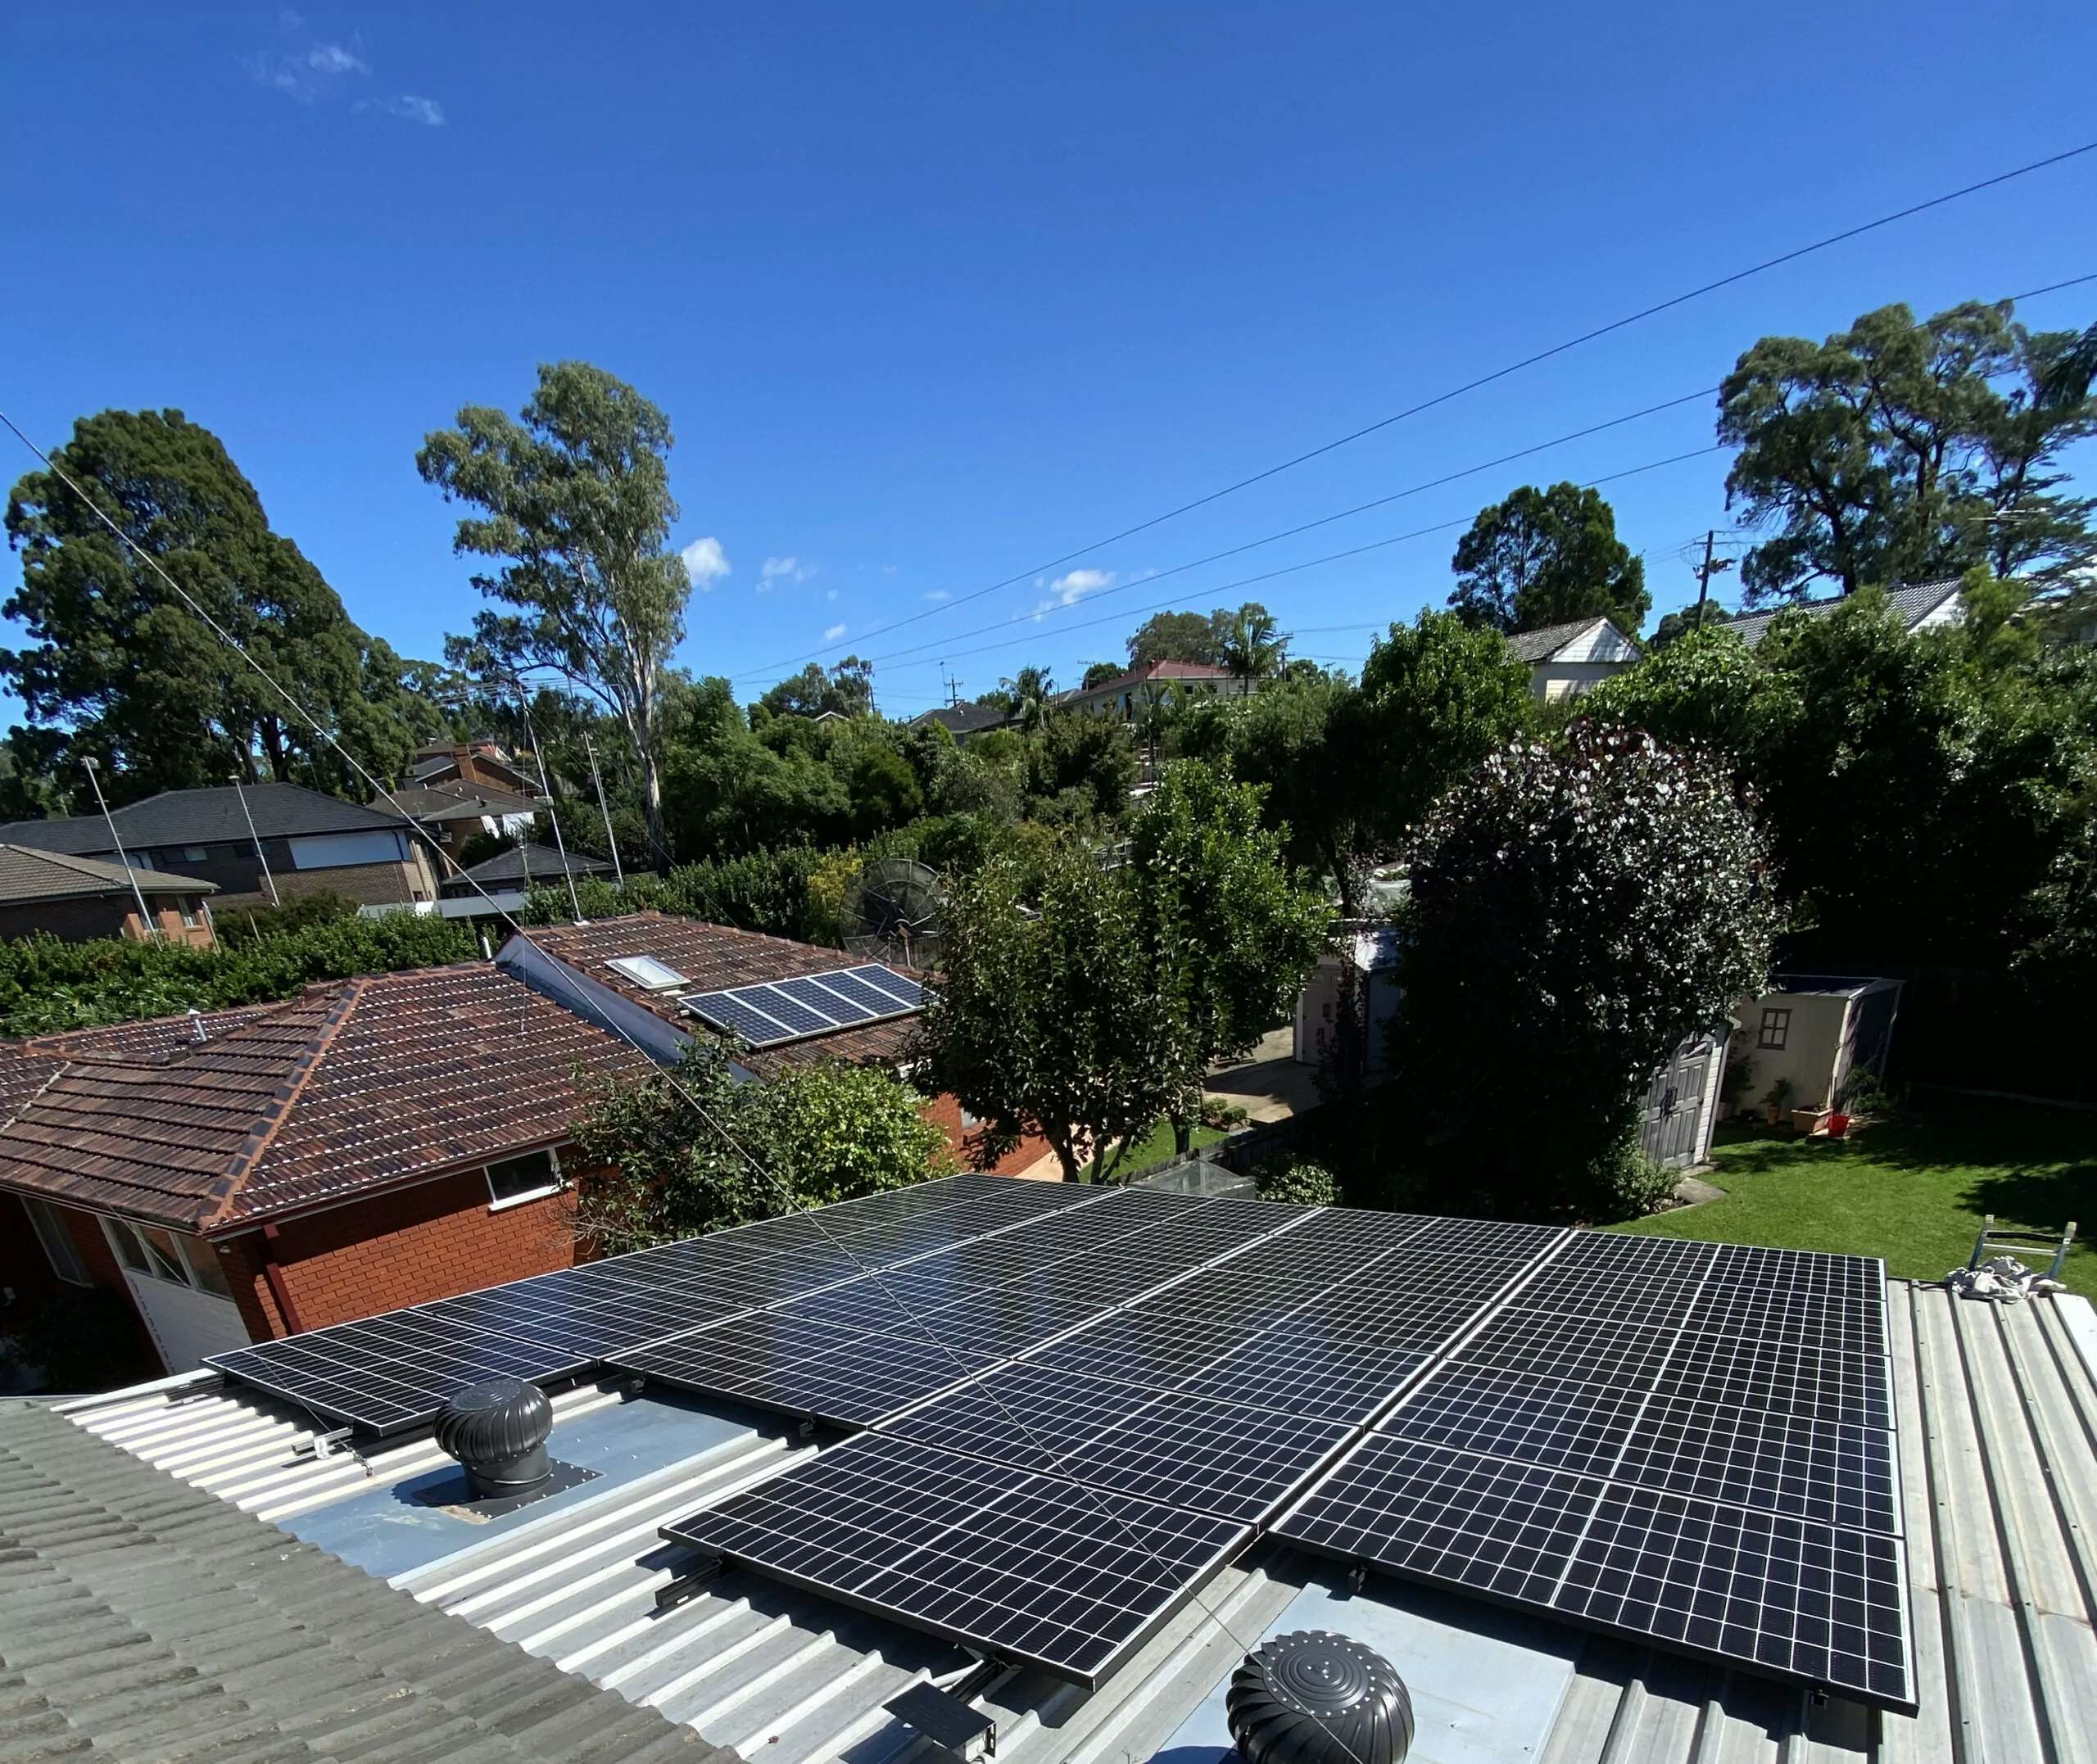 8kW solar panel system residential installation